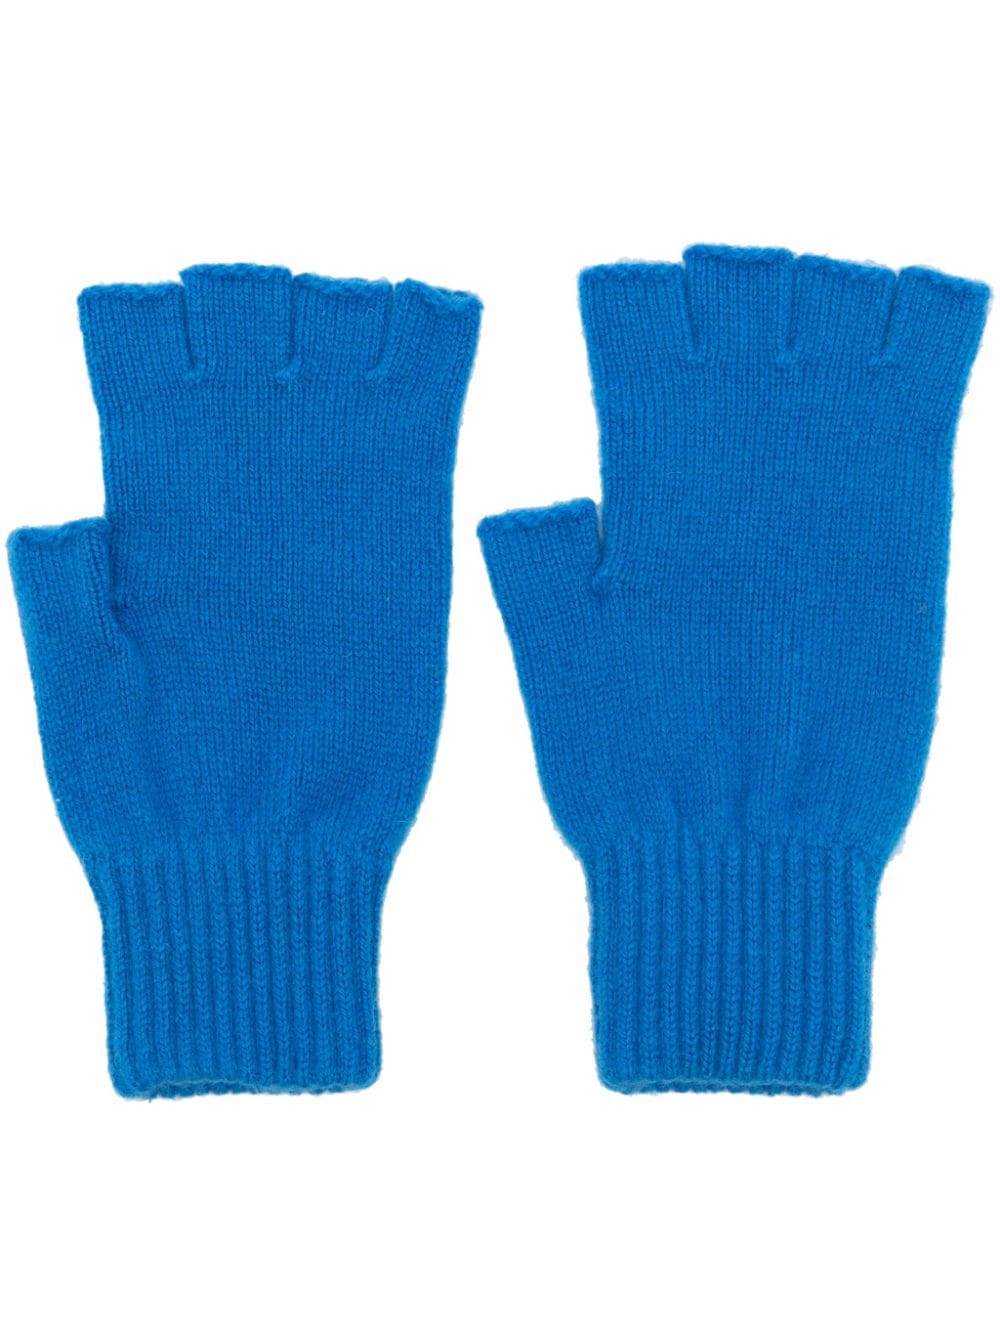 Pringle of Scotland fingerless cashmere gloves - Blue von Pringle of Scotland